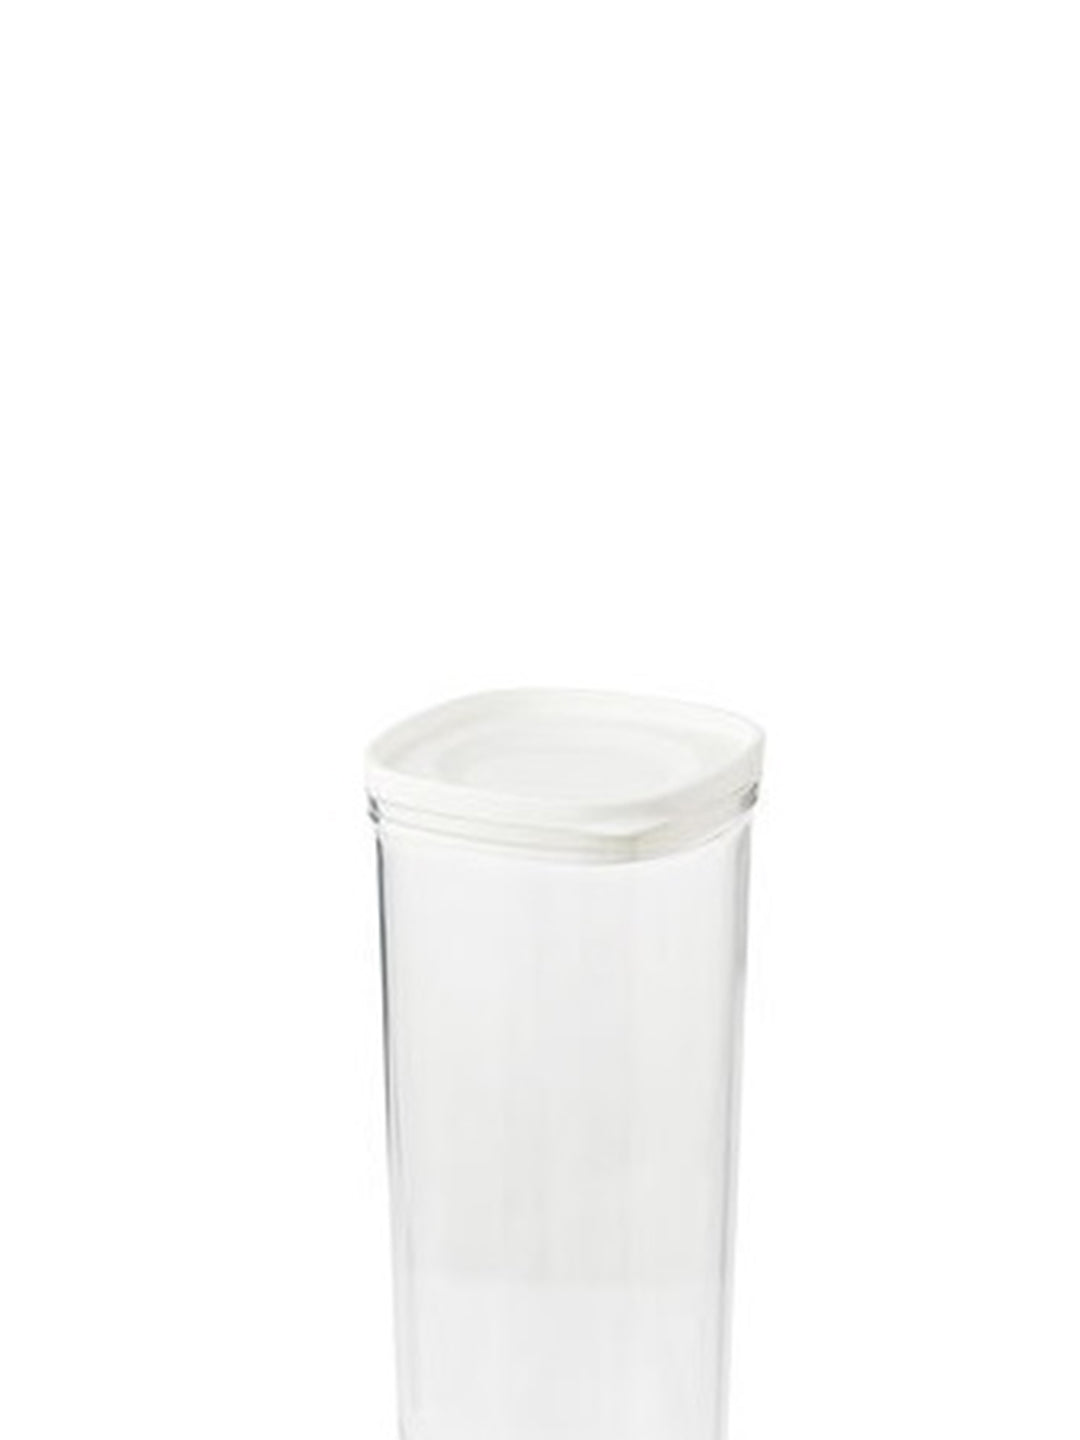 VON CASA Kitchen Cabinet Tall Airtight Plastic Containers - White, Transparent